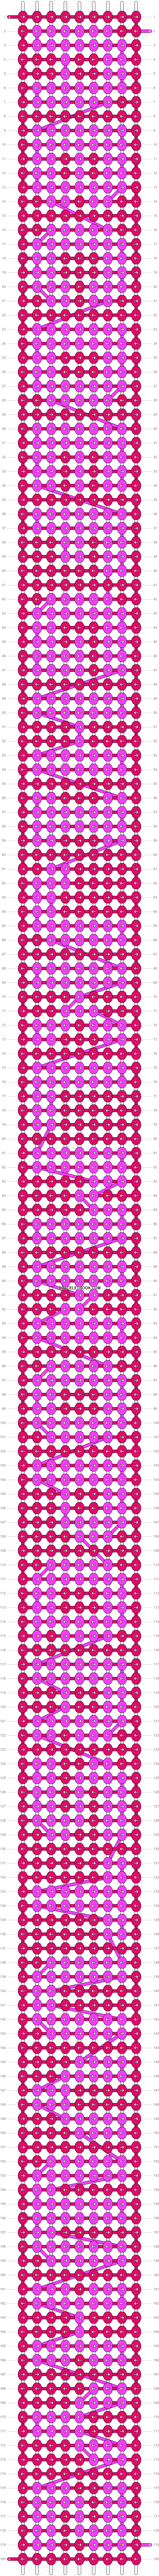 Alpha pattern #47975 variation #215217 pattern